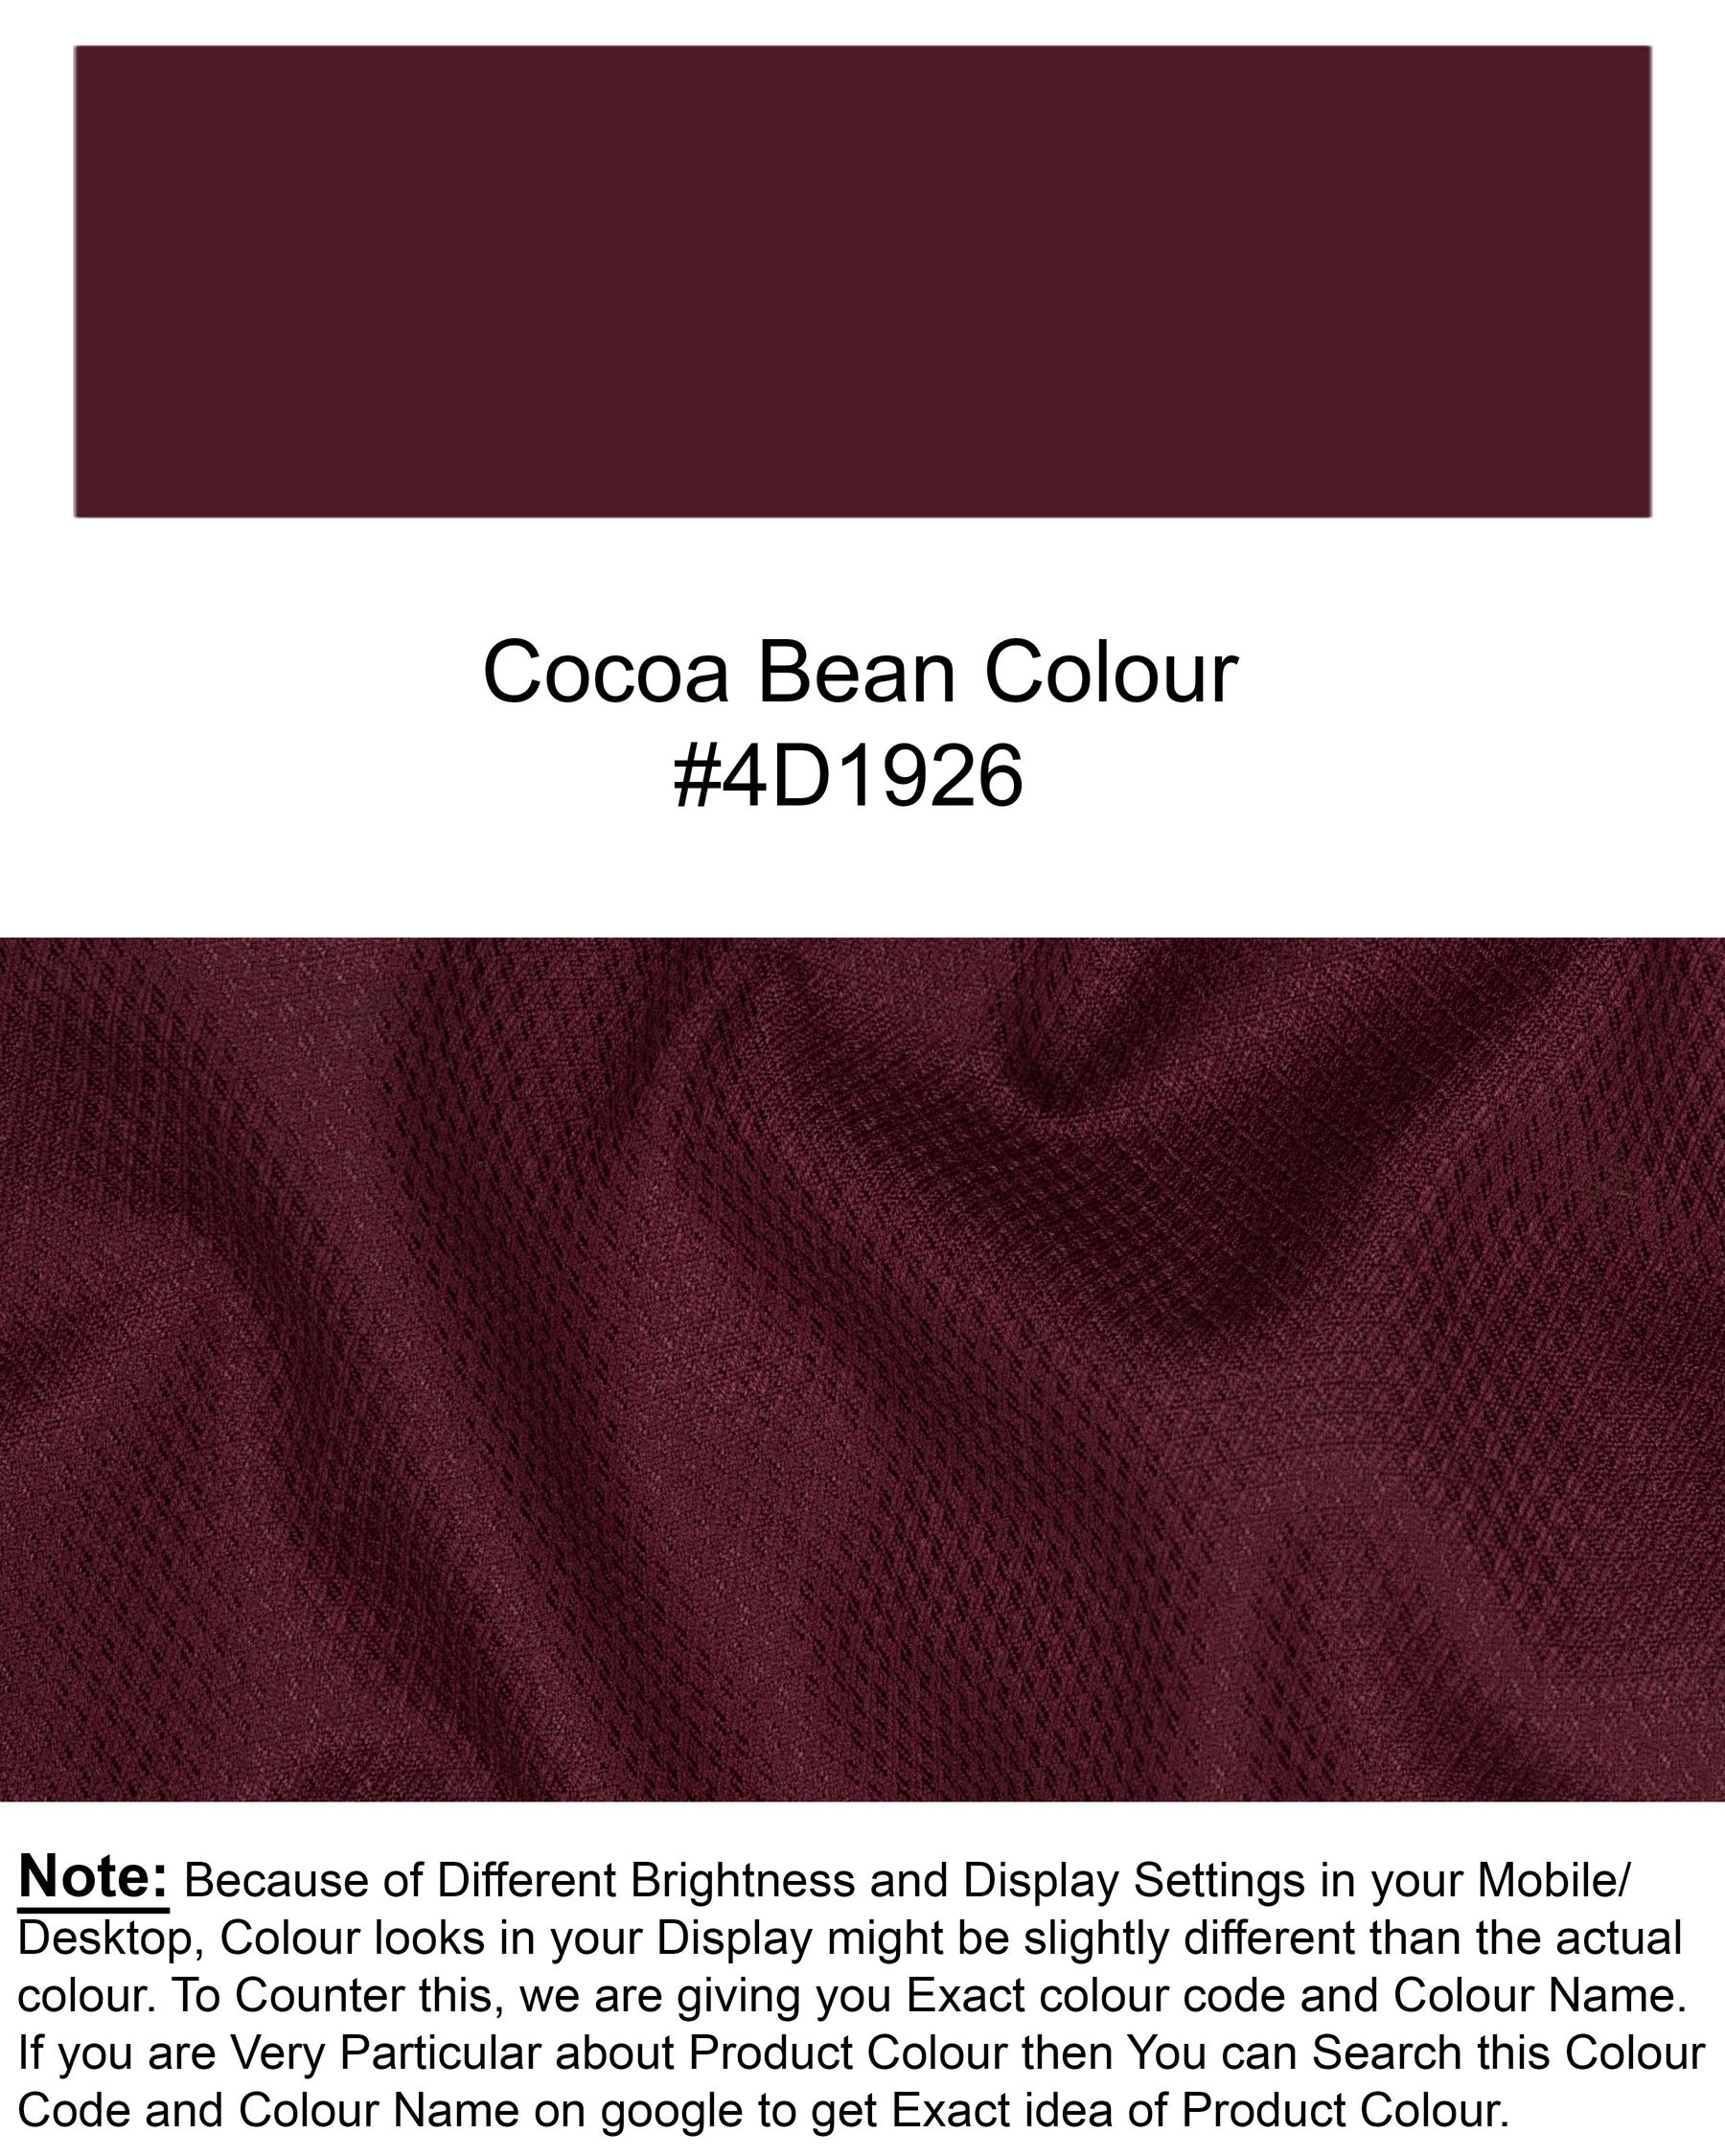 Cocoa Bean Wool Rich Designer Blazer BL1572-SBP-D7-36, BL1572-SBP-D7-38, BL1572-SBP-D7-40, BL1572-SBP-D7-42, BL1572-SBP-D7-44, BL1572-SBP-D7-46, BL1572-SBP-D7-48, BL1572-SBP-D7-50, BL1572-SBP-D7-52, BL1572-SBP-D7-54, BL1572-SBP-D7-56, BL1572-SBP-D7-58, BL1572-SBP-D7-60